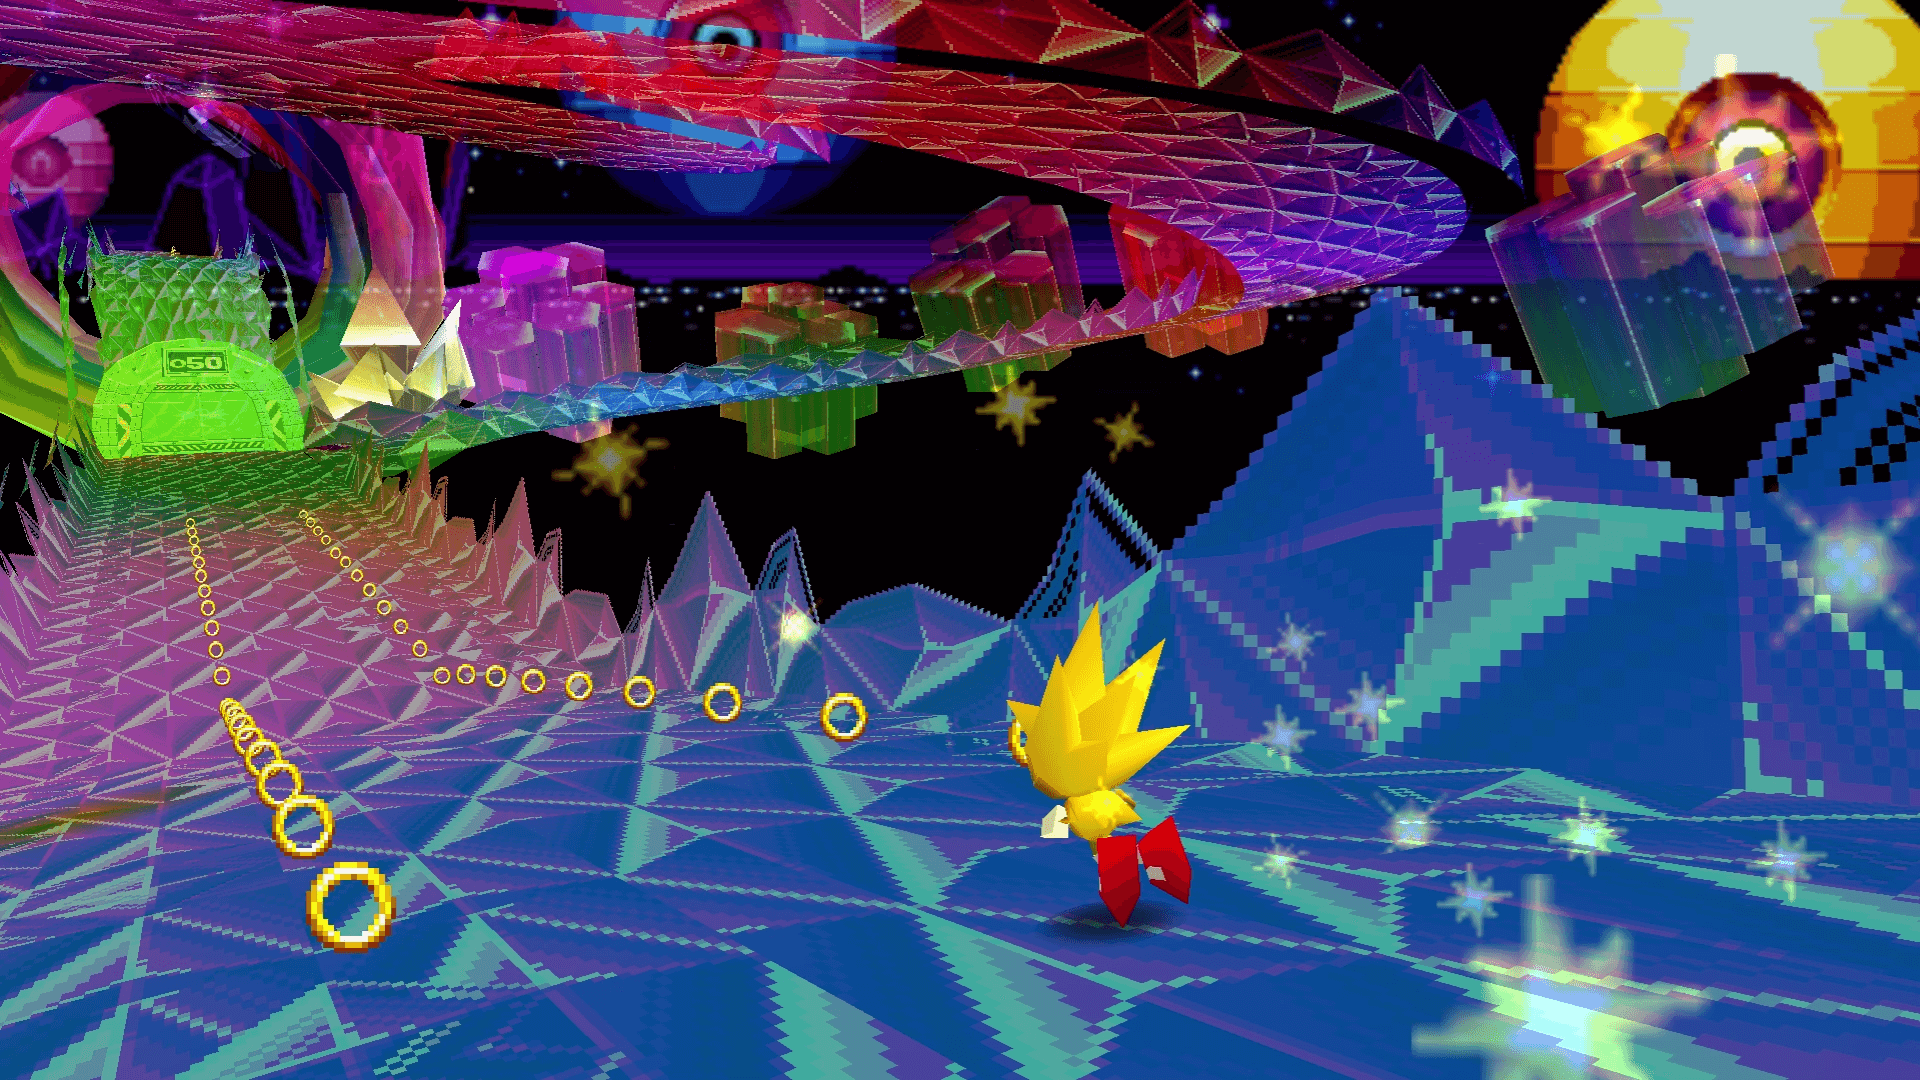 Sonic R Mania [Sonic R] [Mods]